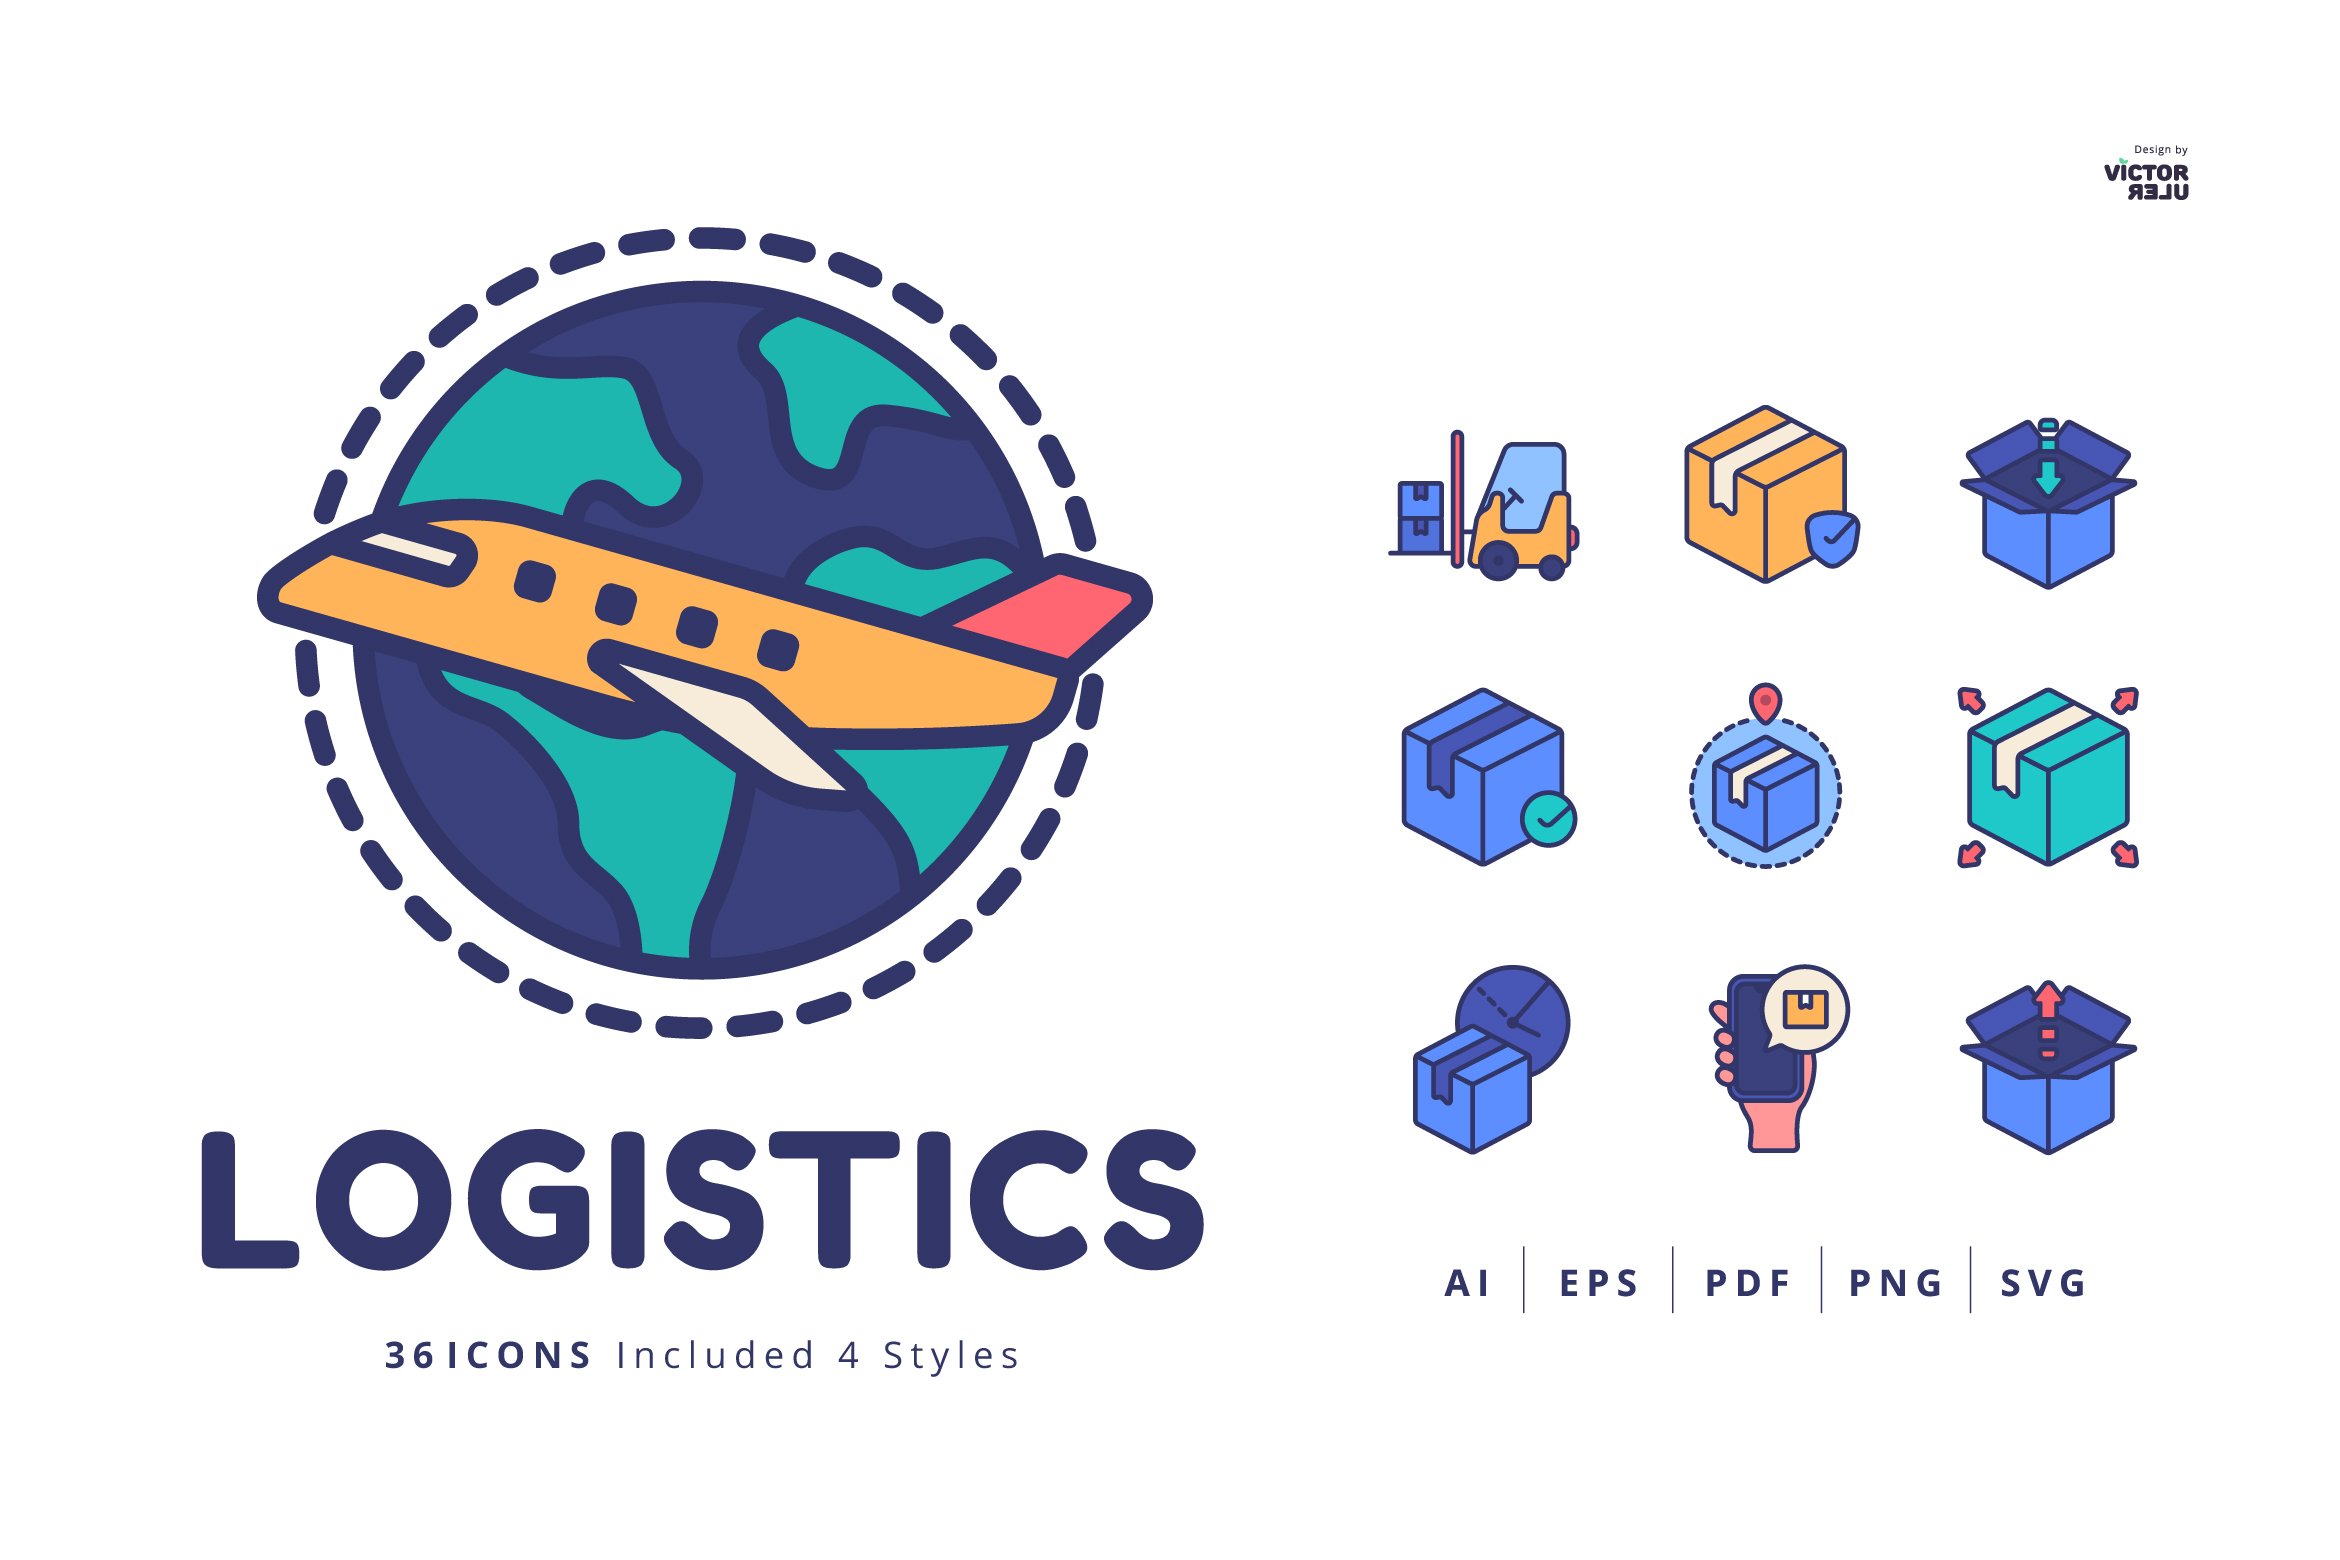 36 Icons Logistics cover image.